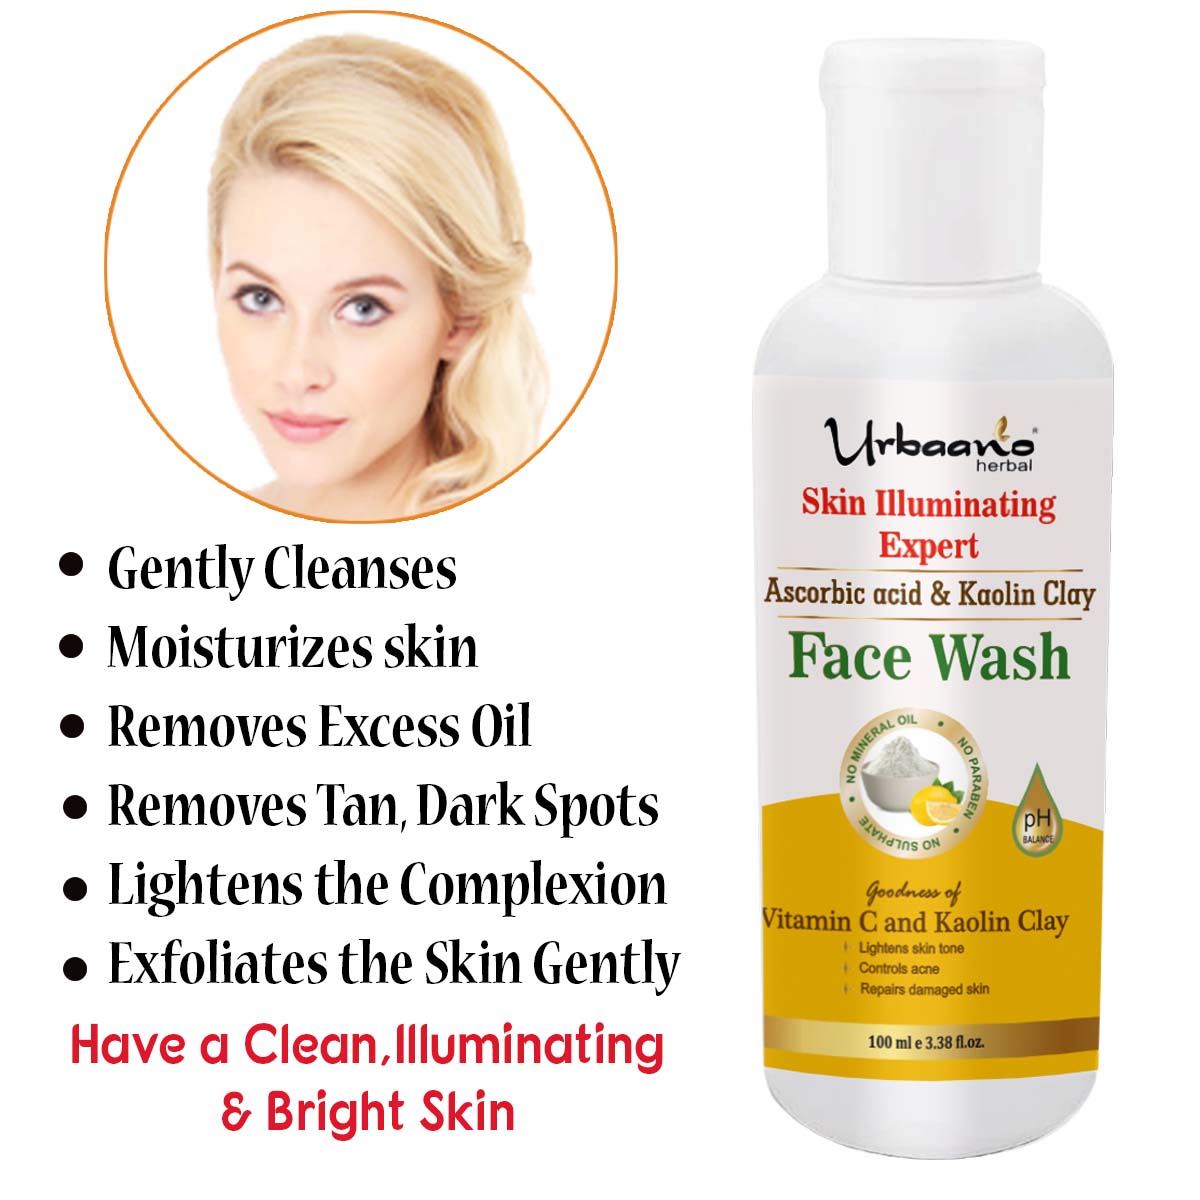 urbaano herbal 5 steps aha facial kit, vitamin c face wash to lighten the skin